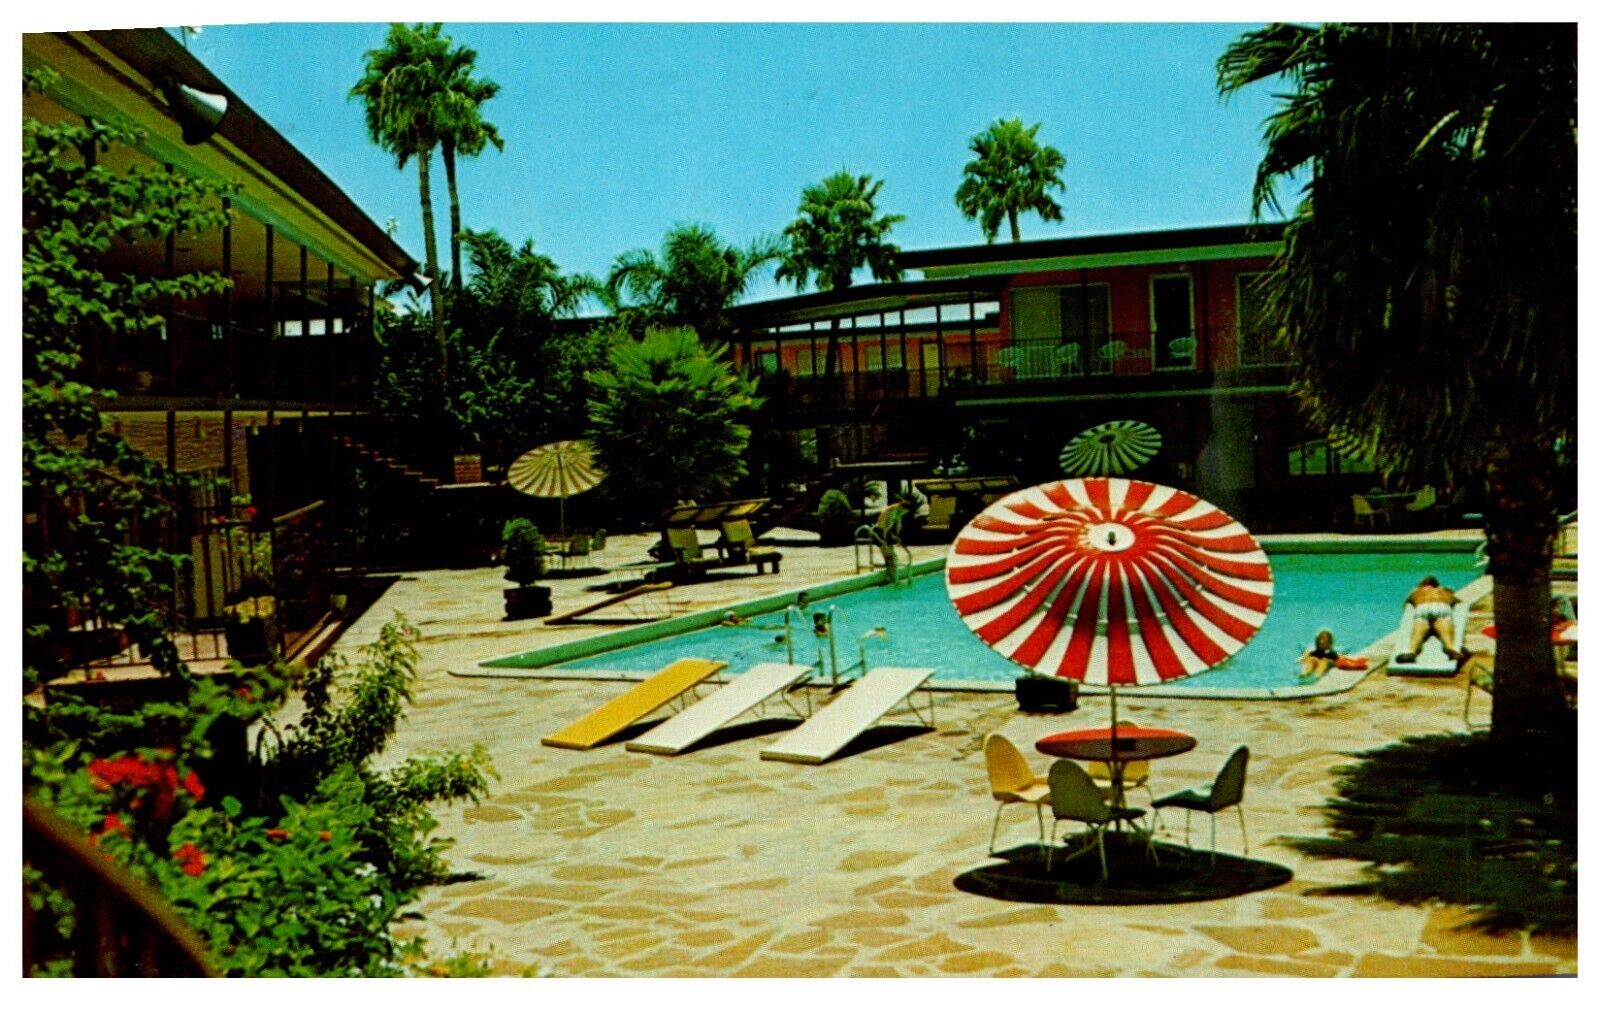 Tally Ho Motor Hotel Corpus Christi, Texas Hotel Motel Adv Postcard